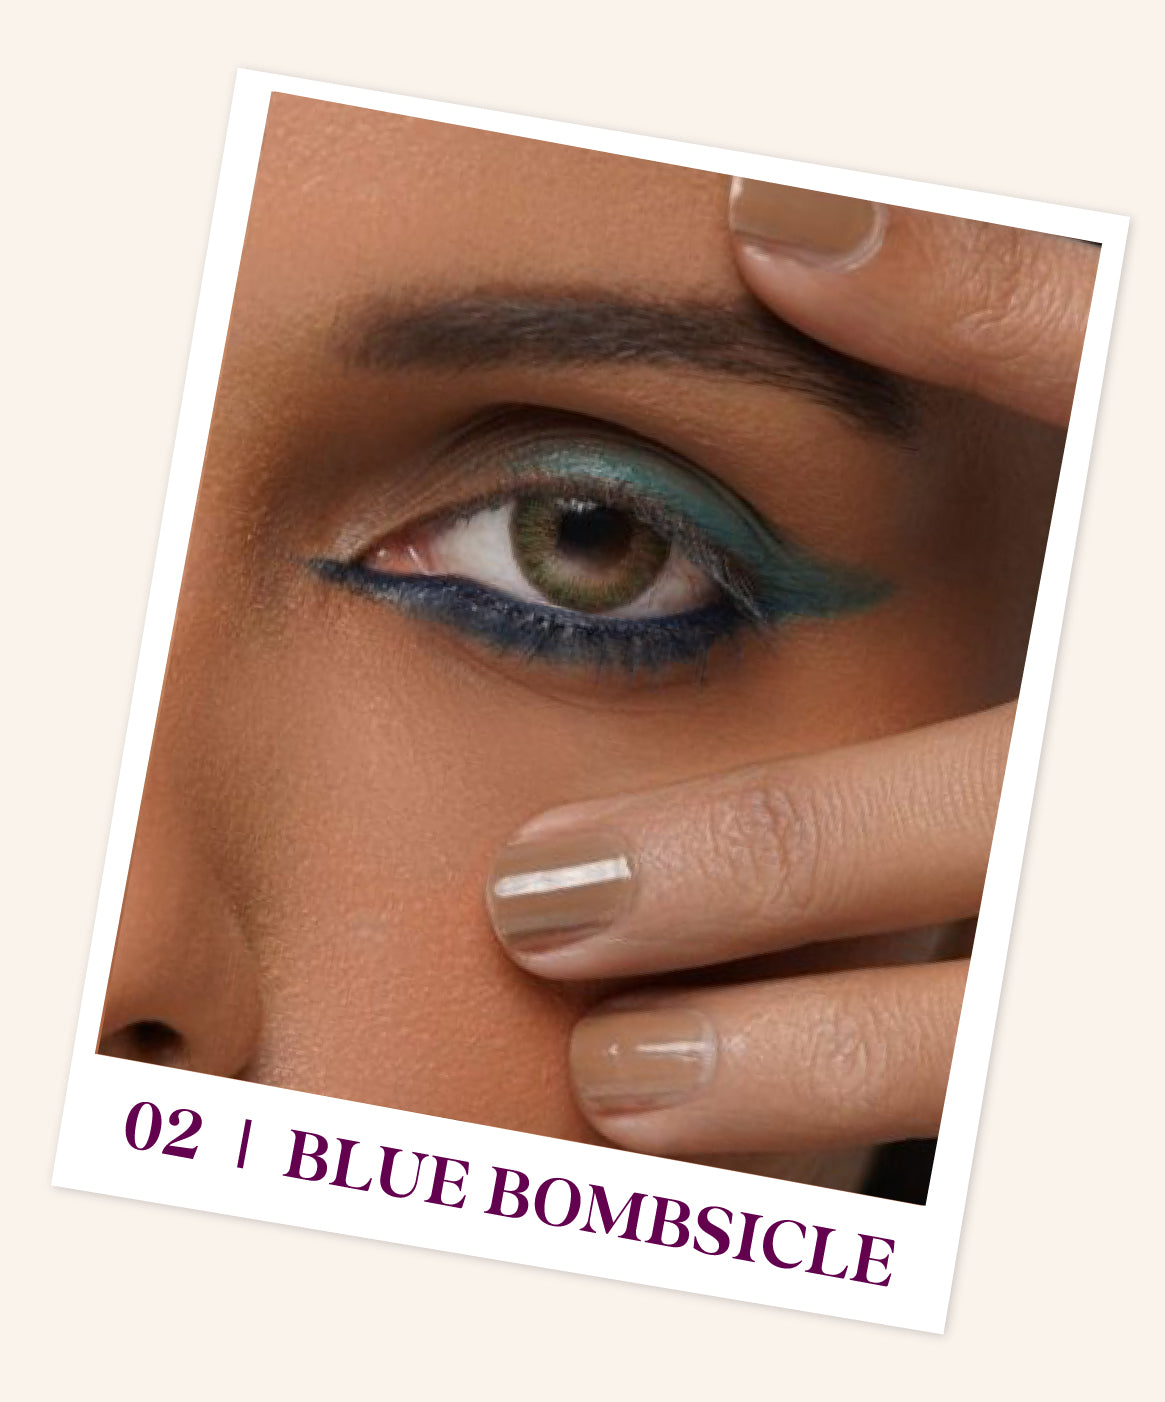 Blue Bombsicle 02 - Navy blue & Shimmery aqua blue